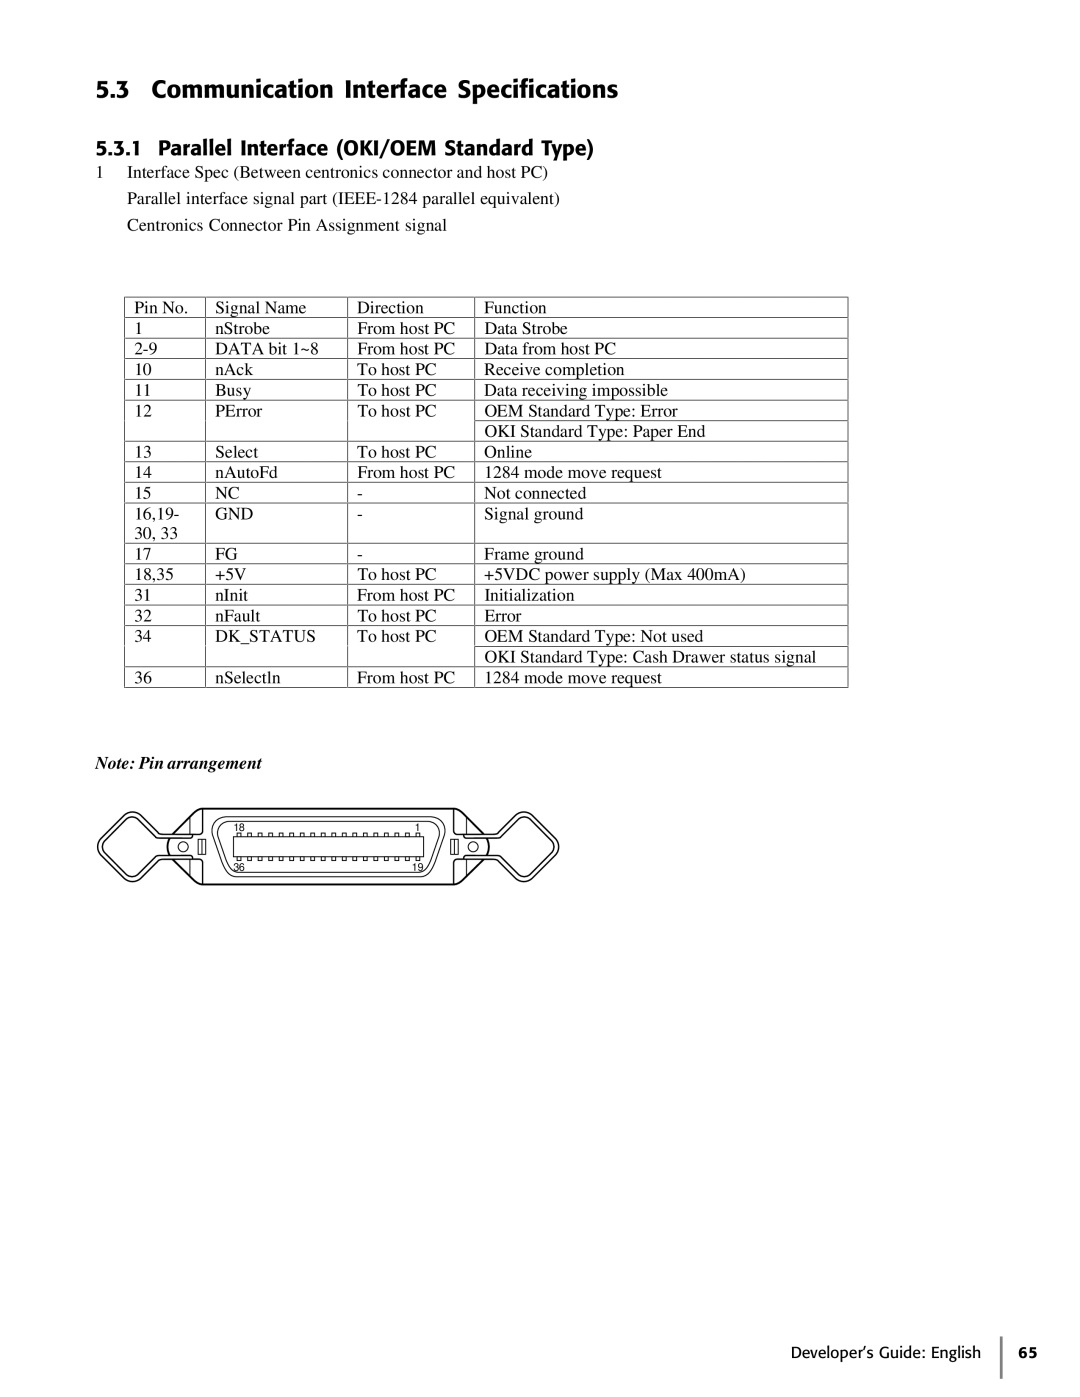 Oki 425D manual Communication Interface Specifications, Parallel Interface OKI/OEM Standard Type 